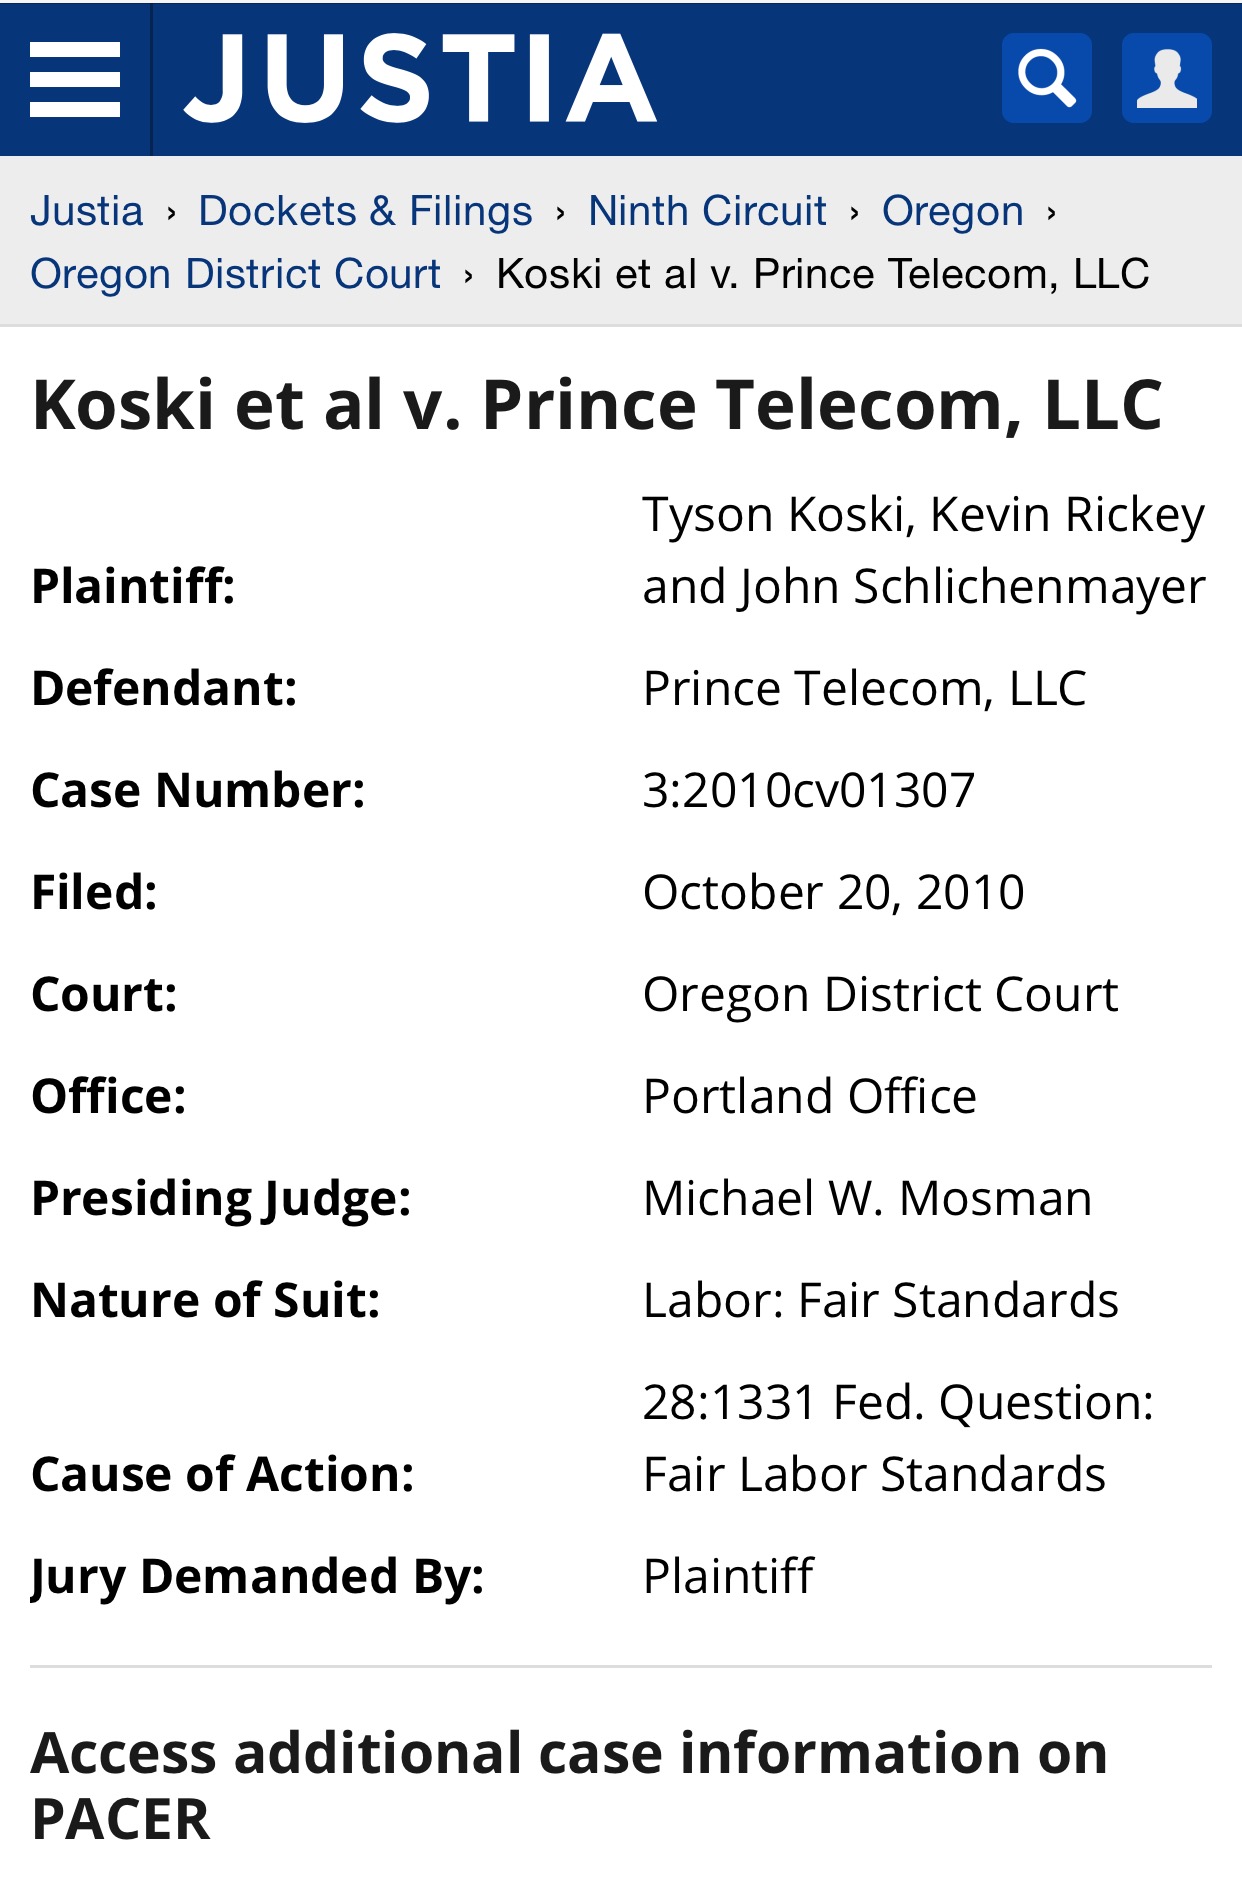 Koski v Prince Telecom Labor lawsuit https://dockets.justia.com/docket/oregon/ordce/3:2010cv01307/99952